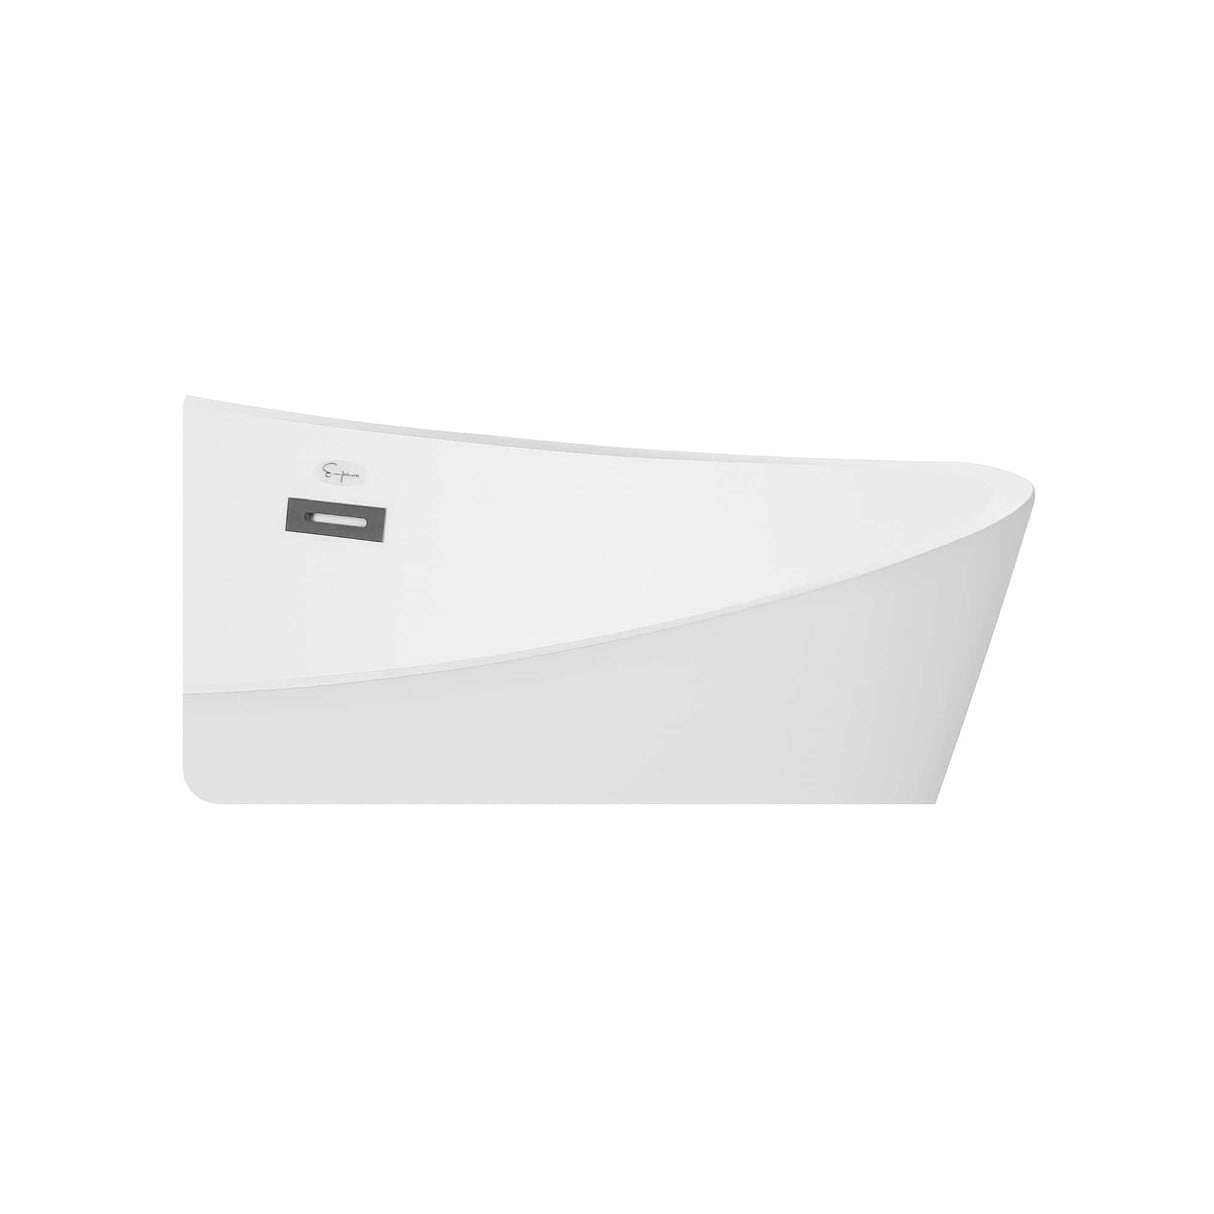 Empava-59FT1518LED freestanding acrylic soaking oval modern white bathtub over  flow